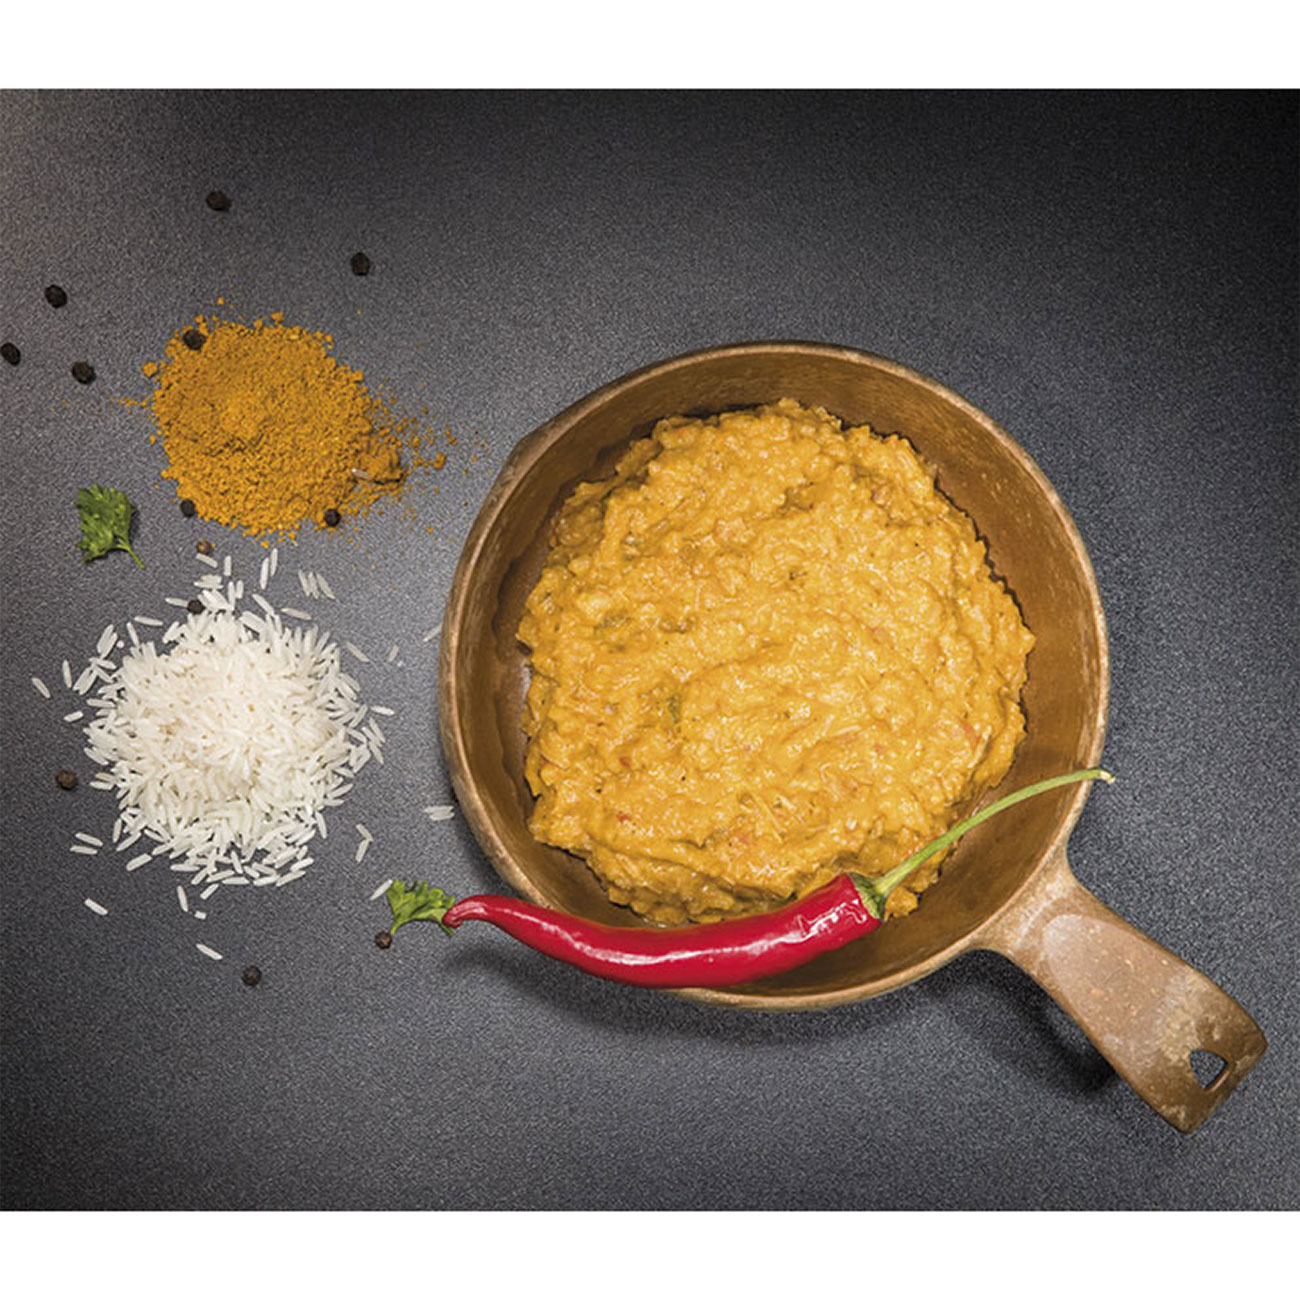 Tactical Foodpack Outdoor Mahlzeit Curry-Hühnchen und Reis Bild 1